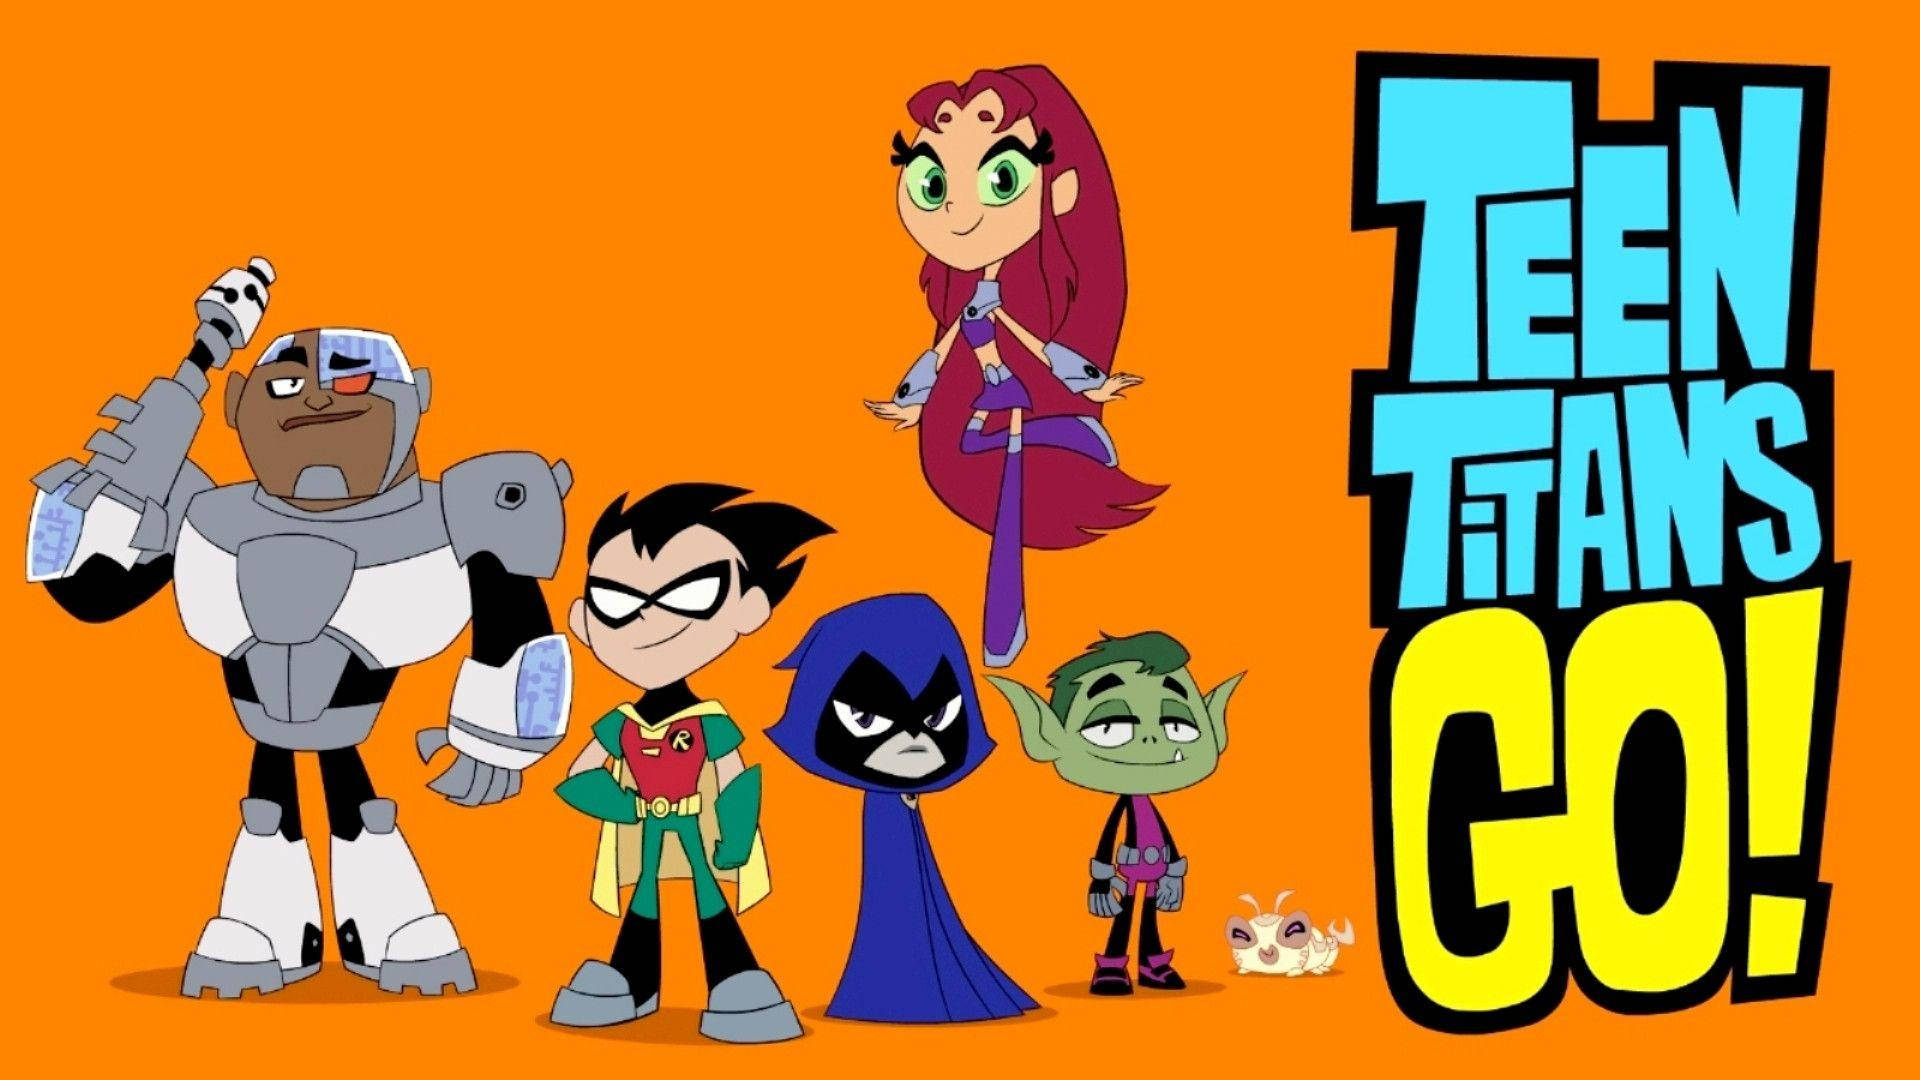 Teen Titans Fan Poster Dekoration: Få dette teen titans fan poster dekoration billede på din computer eller mobil! Wallpaper